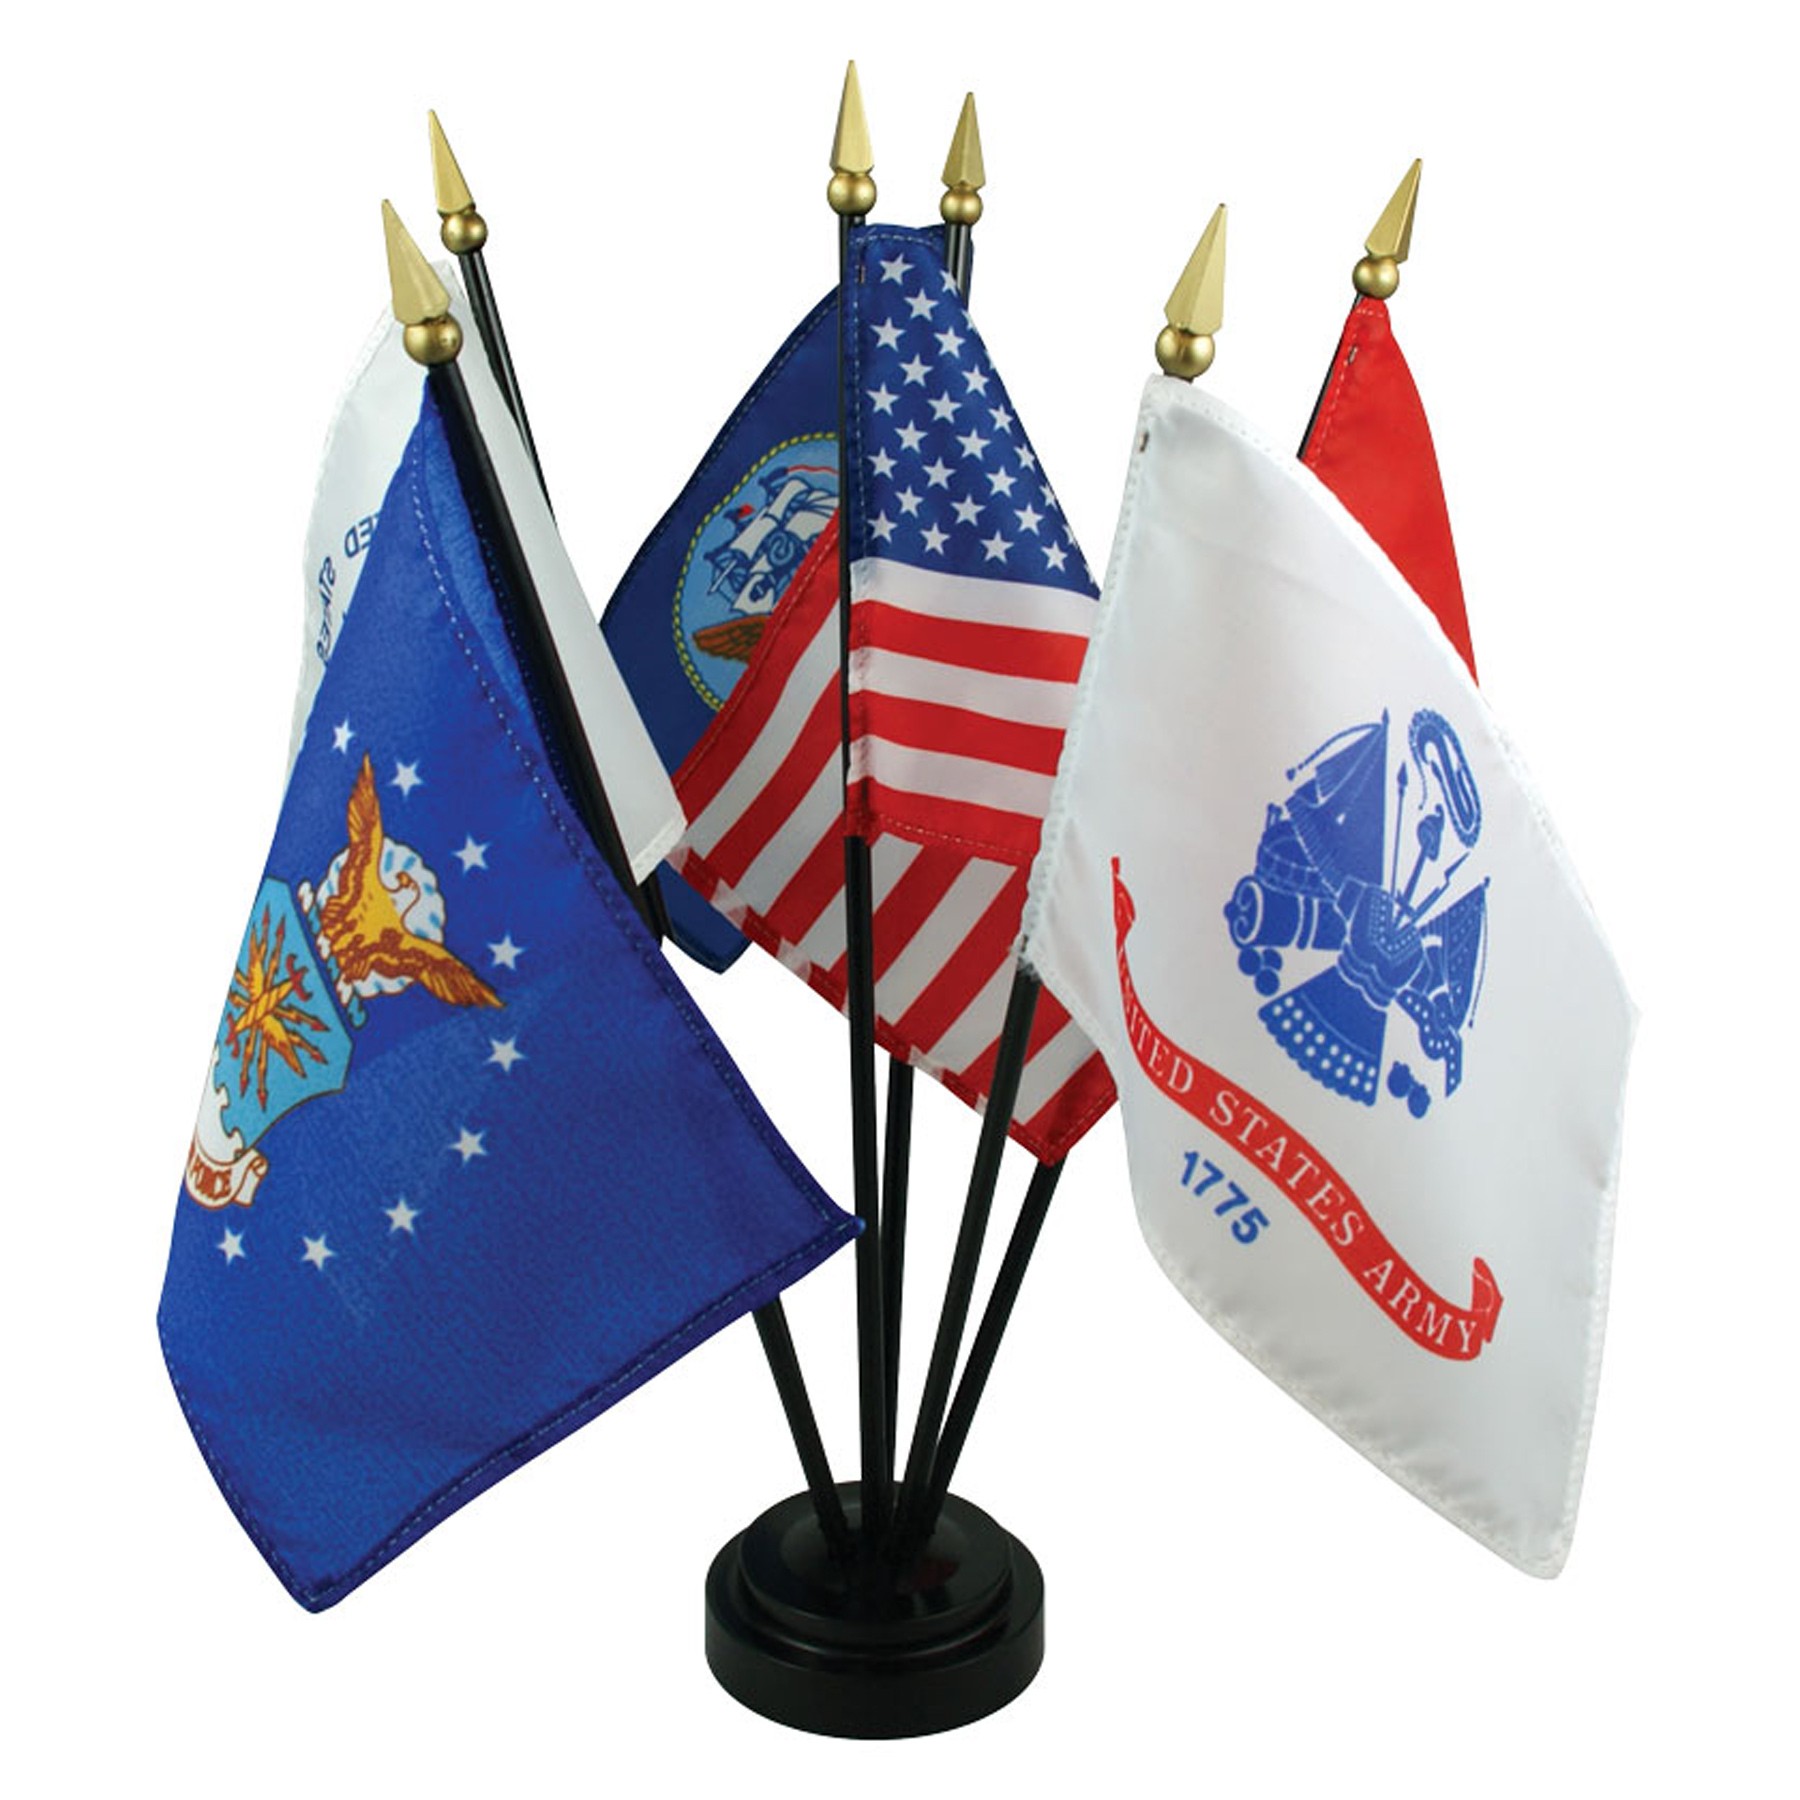 Custom Table Building Pennants and Flags